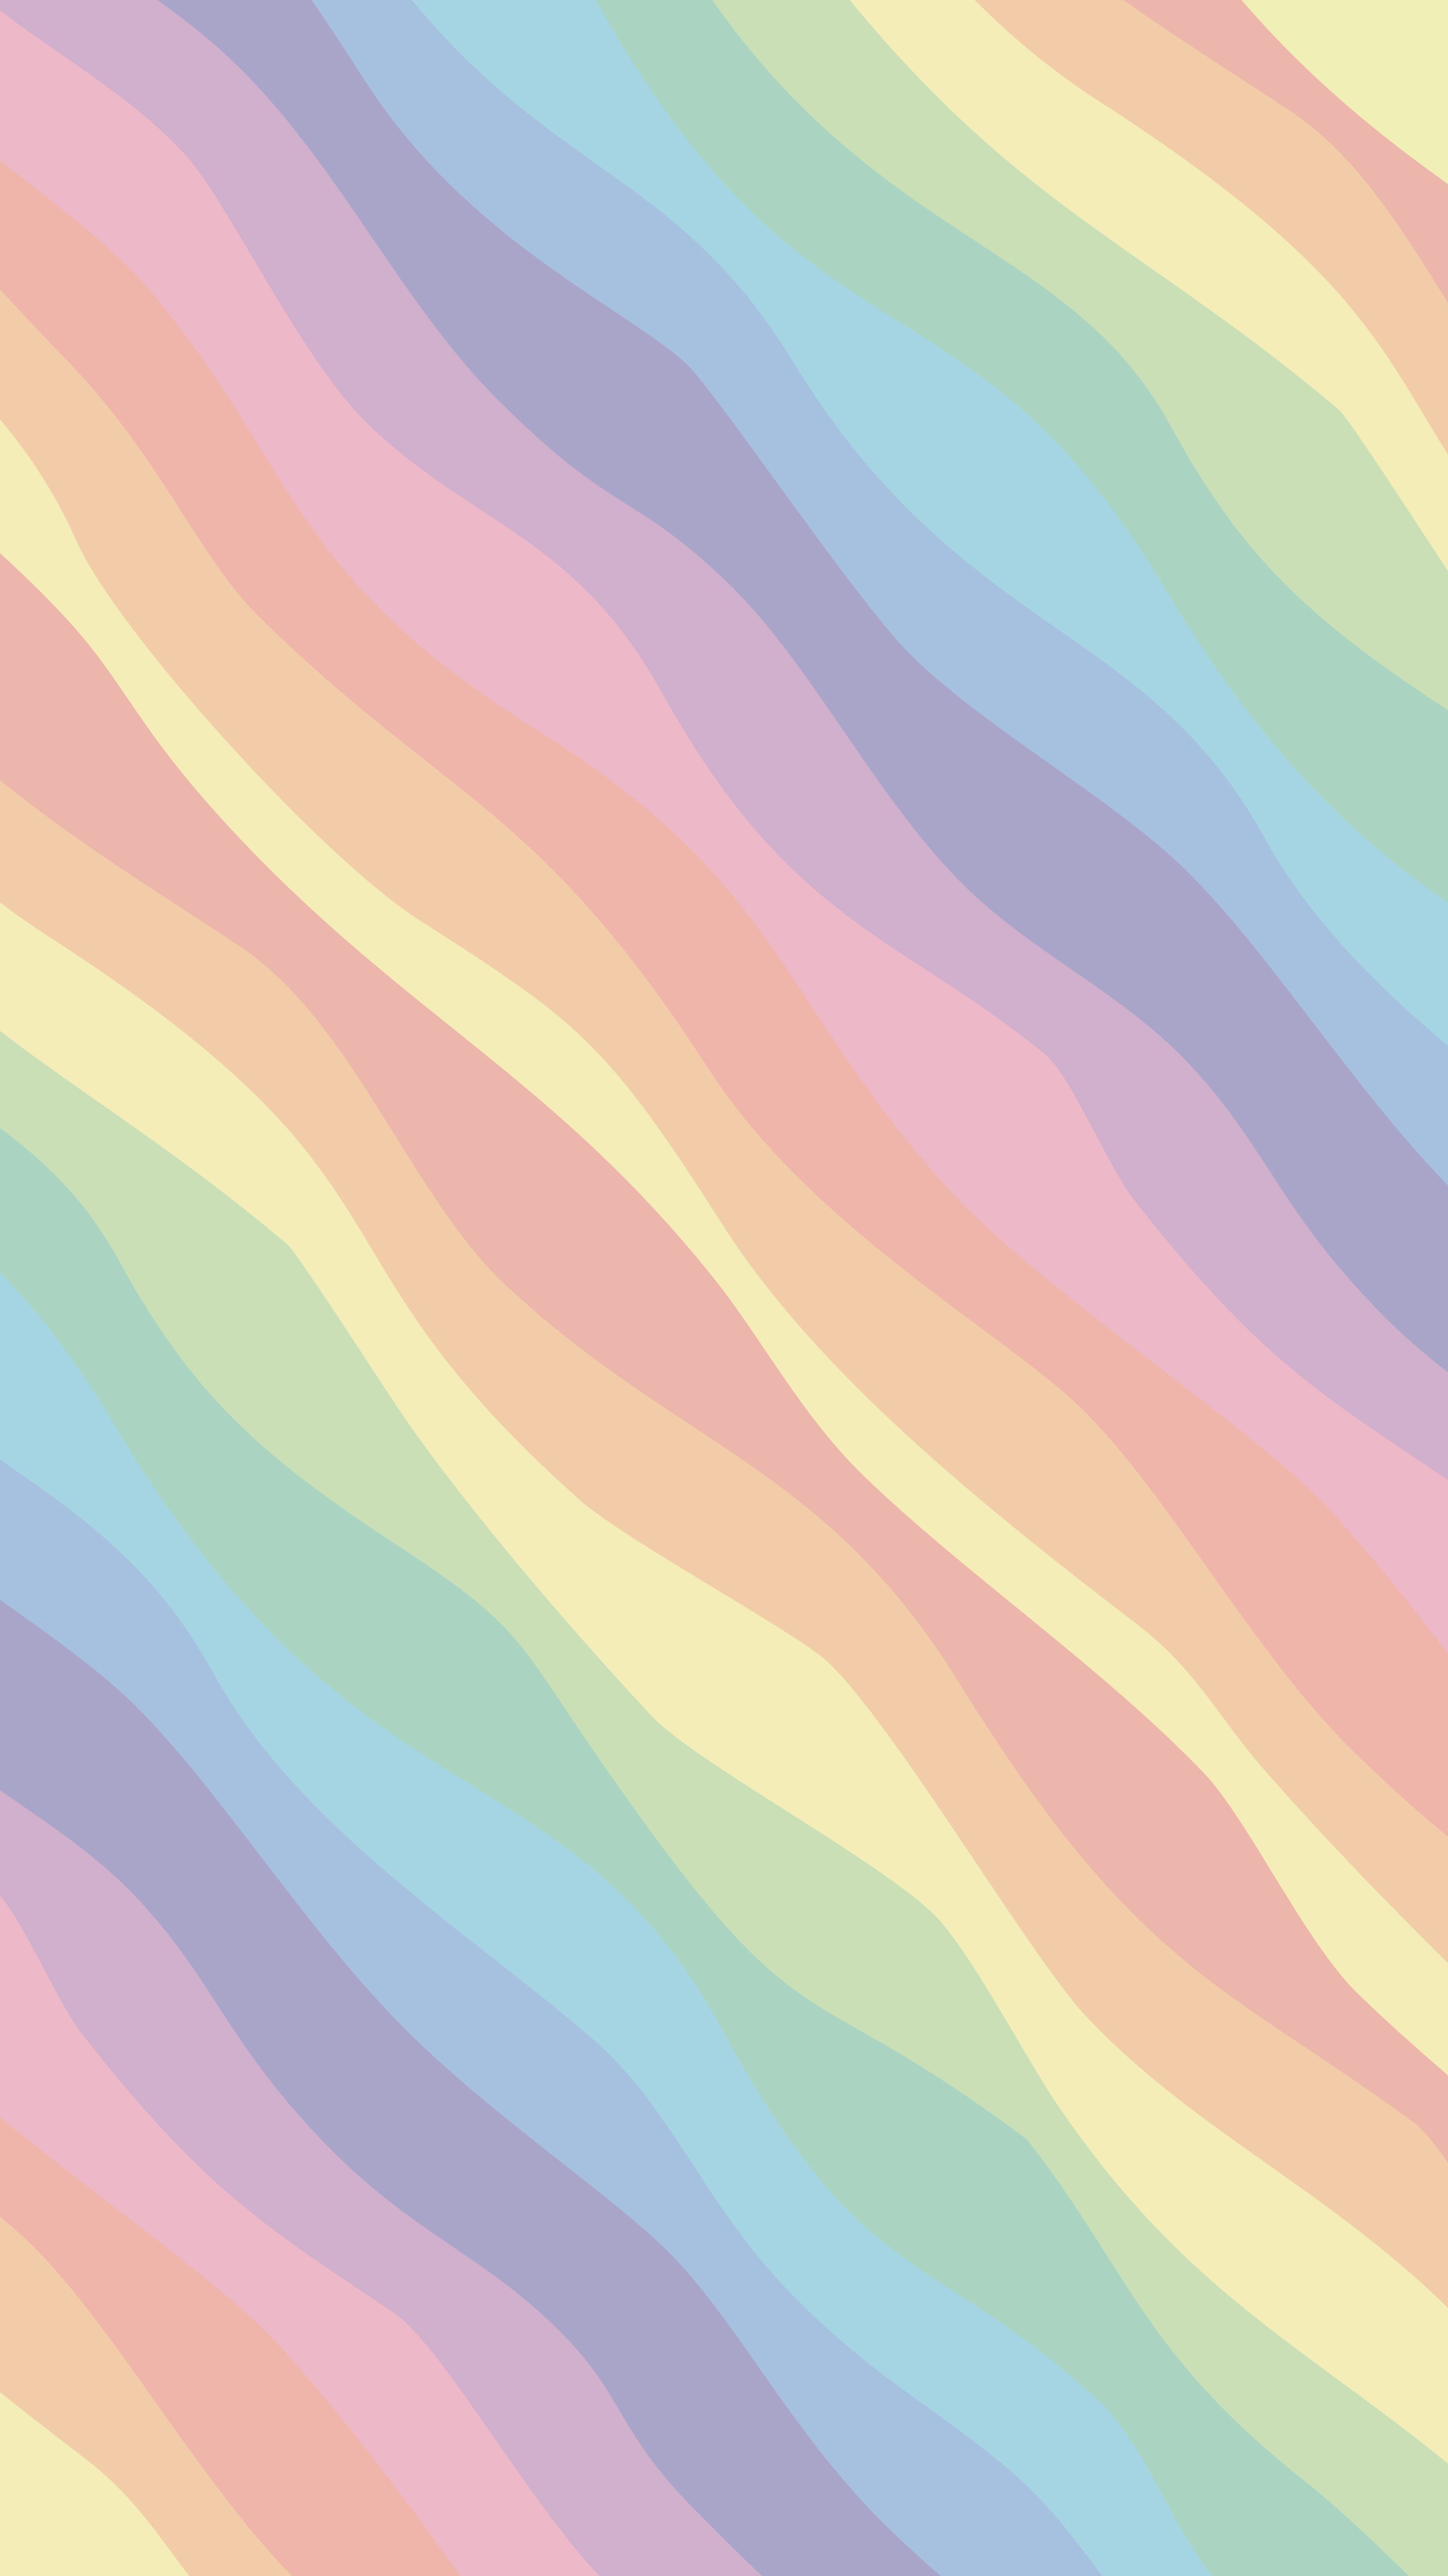 Phone Wallpaper. 'Rainbow pastel wave'. iPhone wallpaper pattern, Phone wallpaper patterns, Cute patterns wallpaper